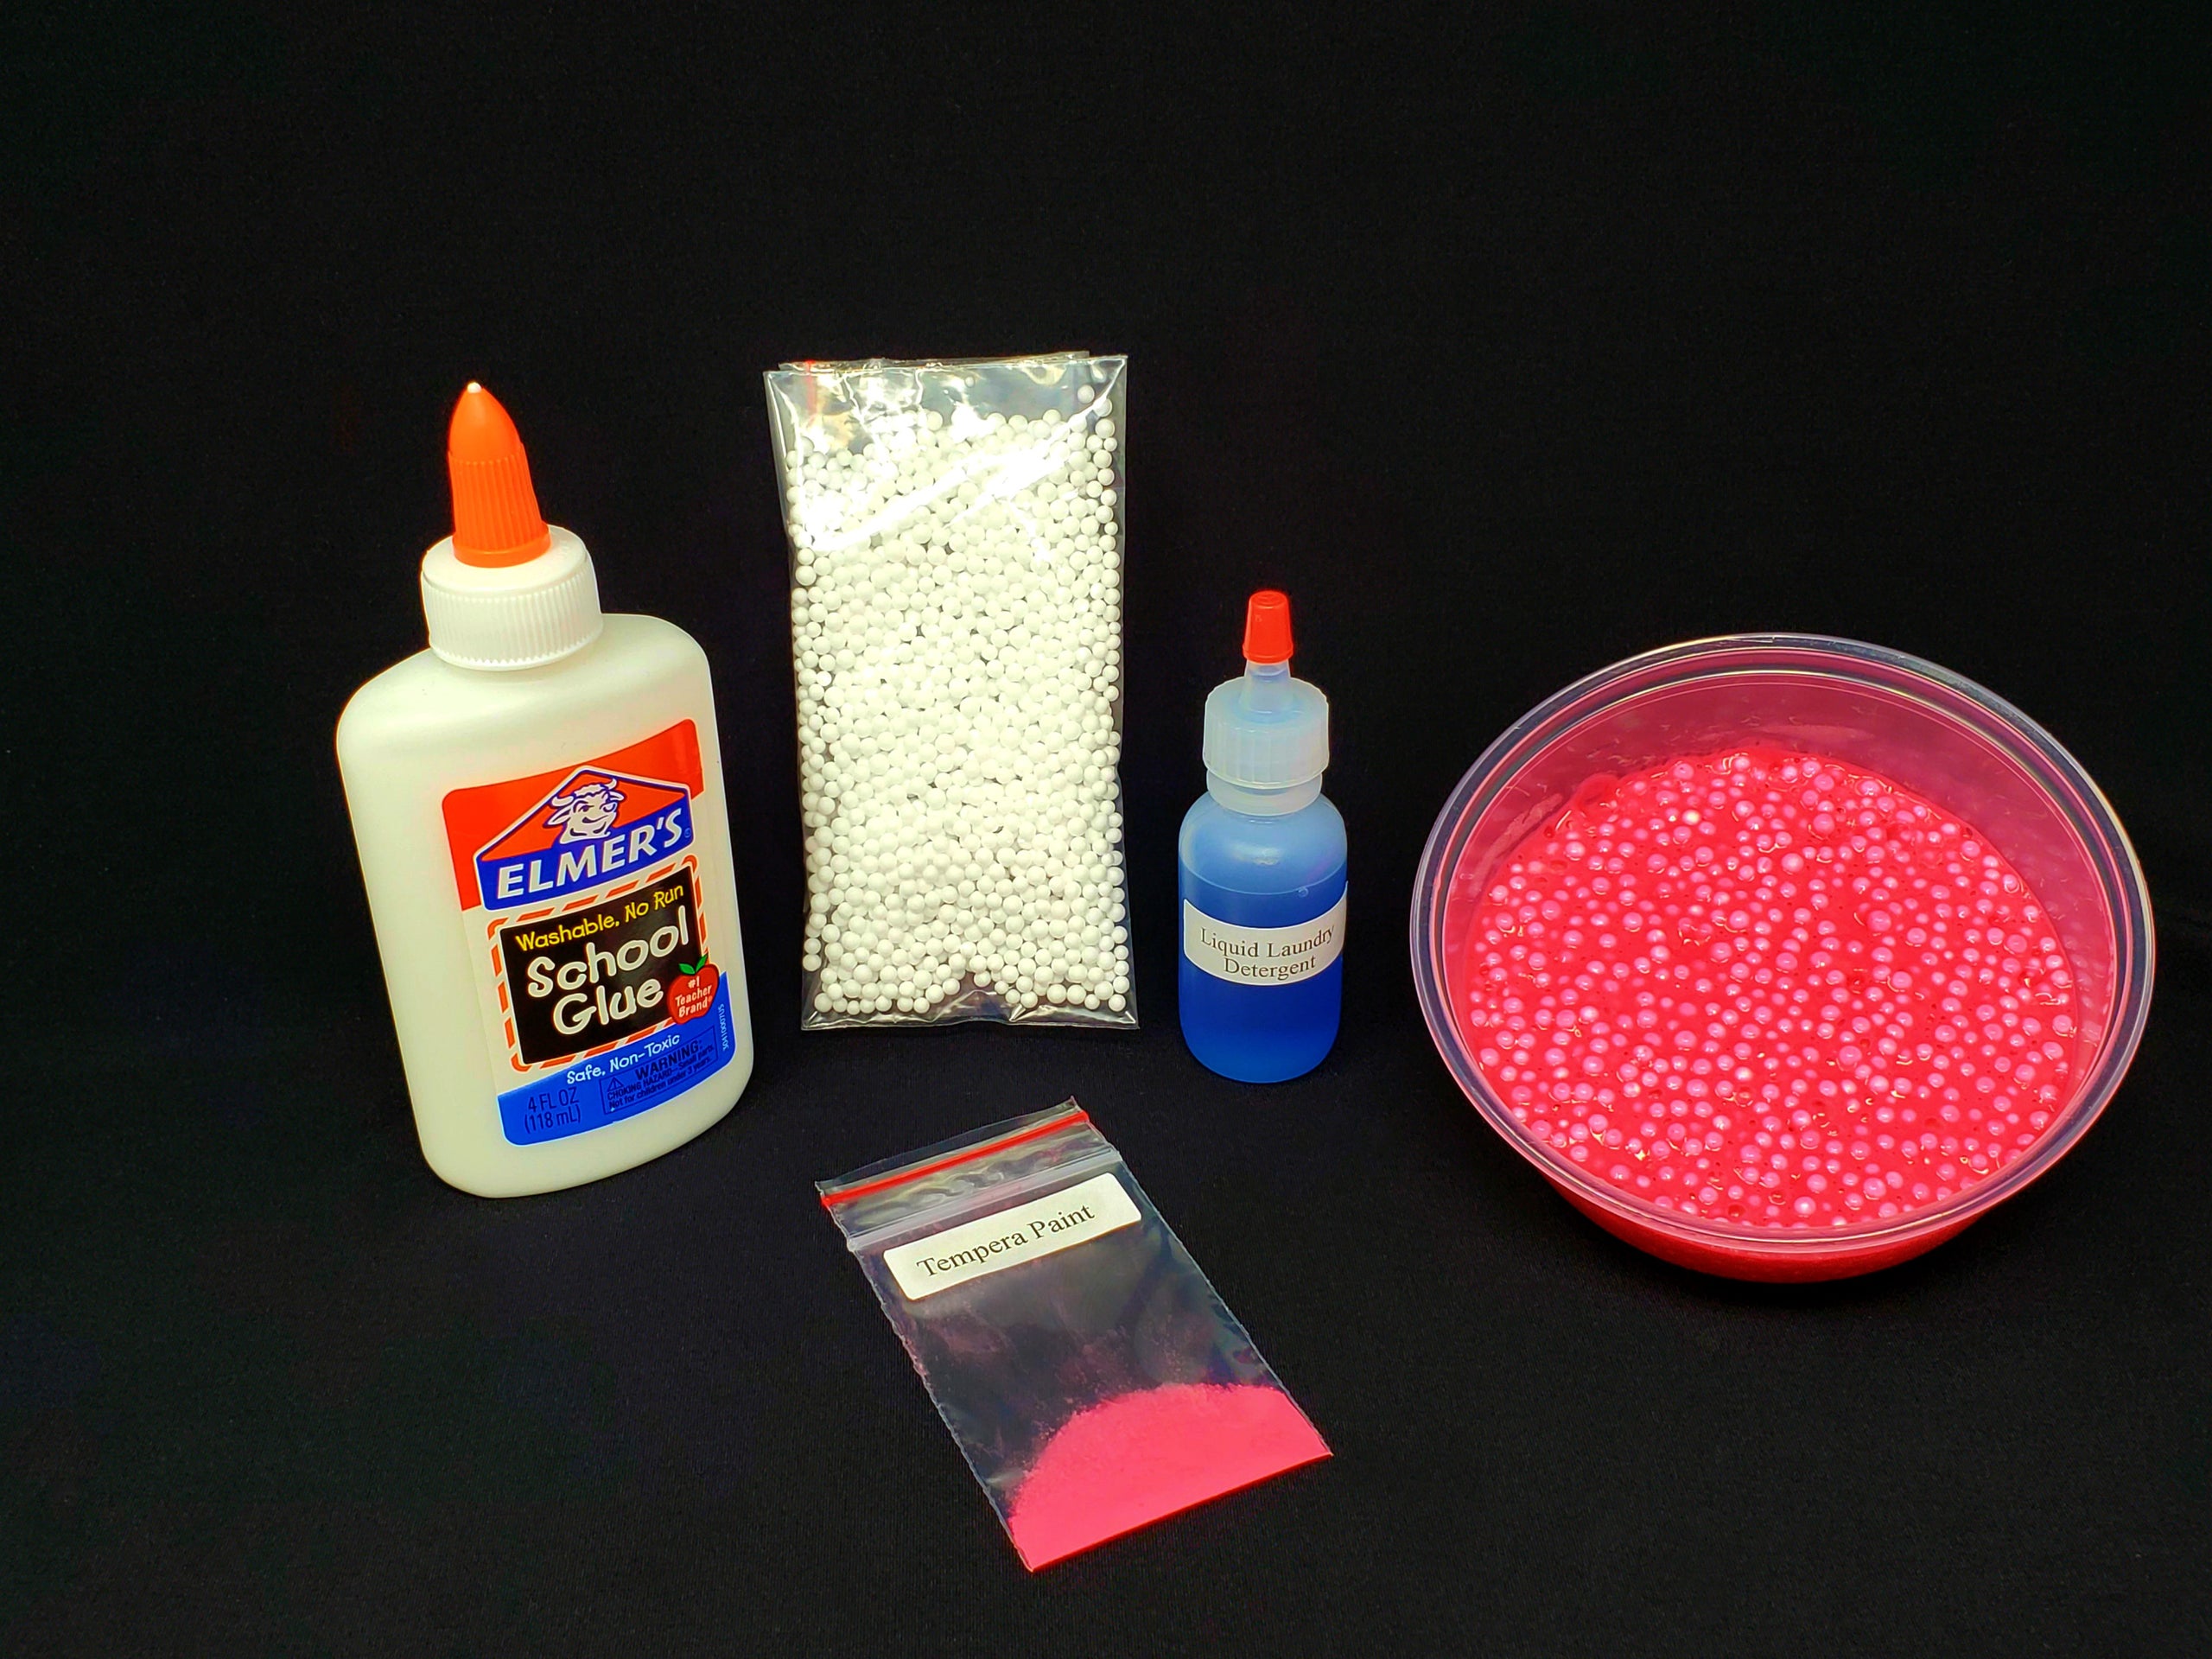 Slime Kit FAMILY FUN Glitter GLOW Slime Making Kit Supplies STEM